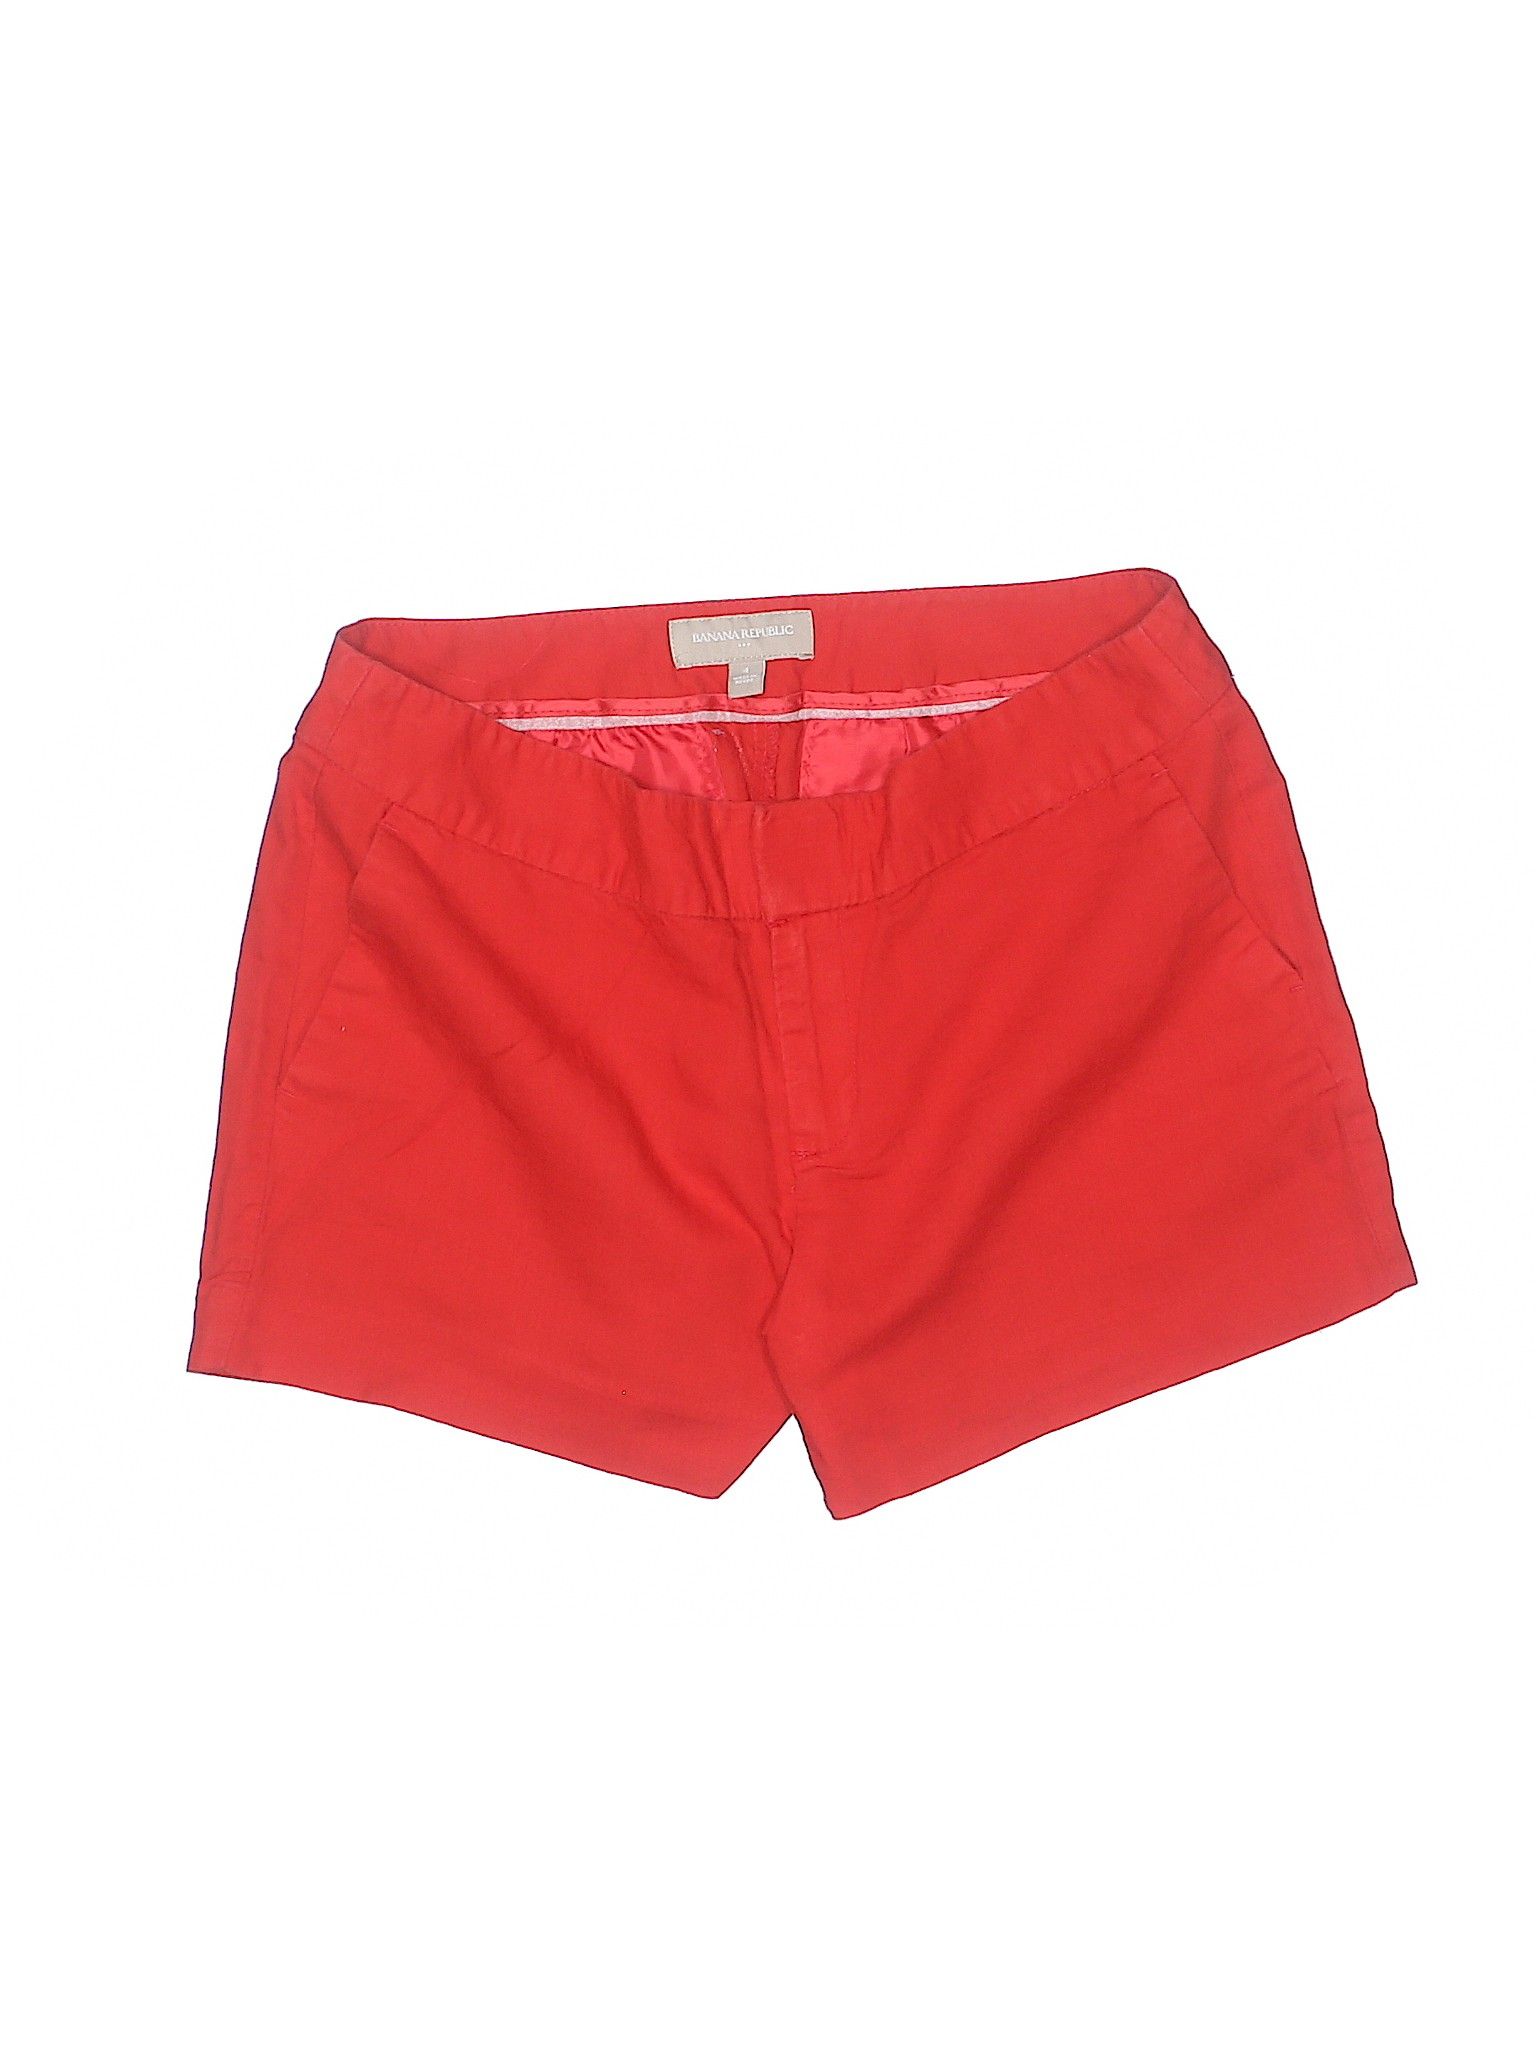 Banana Republic Factory Store Shorts Size 4: Red Women's Bottoms - 38436910 | thredUP